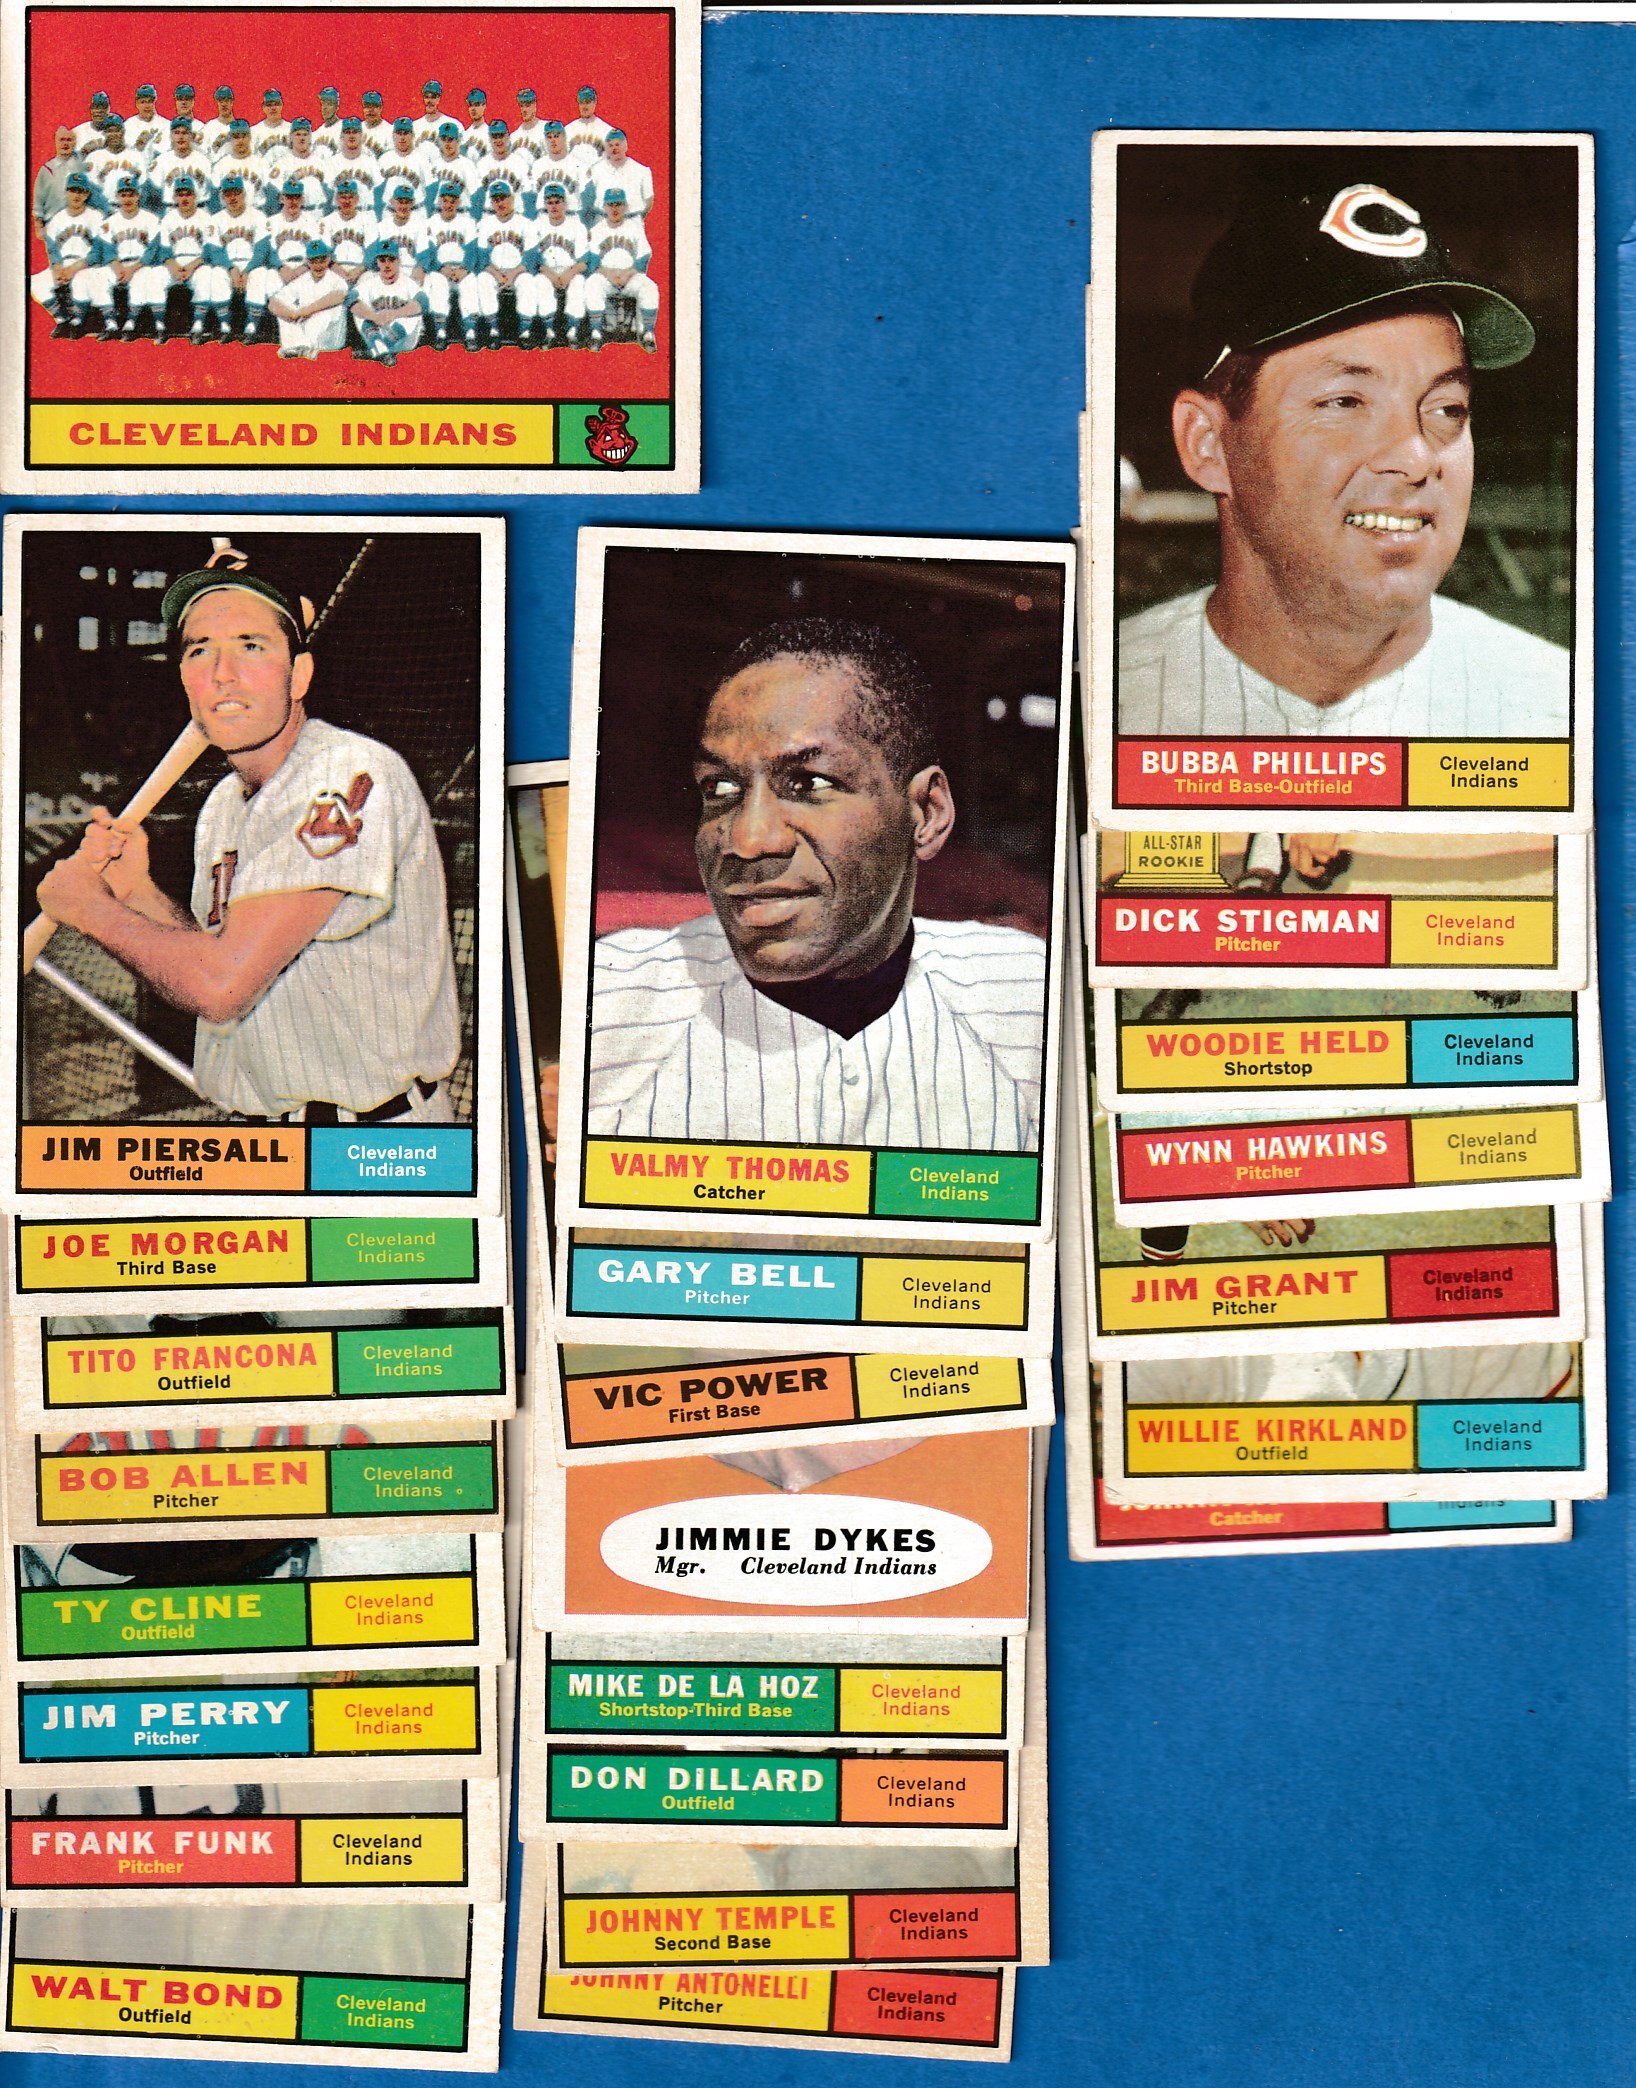 1961 Topps Regular (Baseball) Card# 65 Ted Kluszewski of the Los